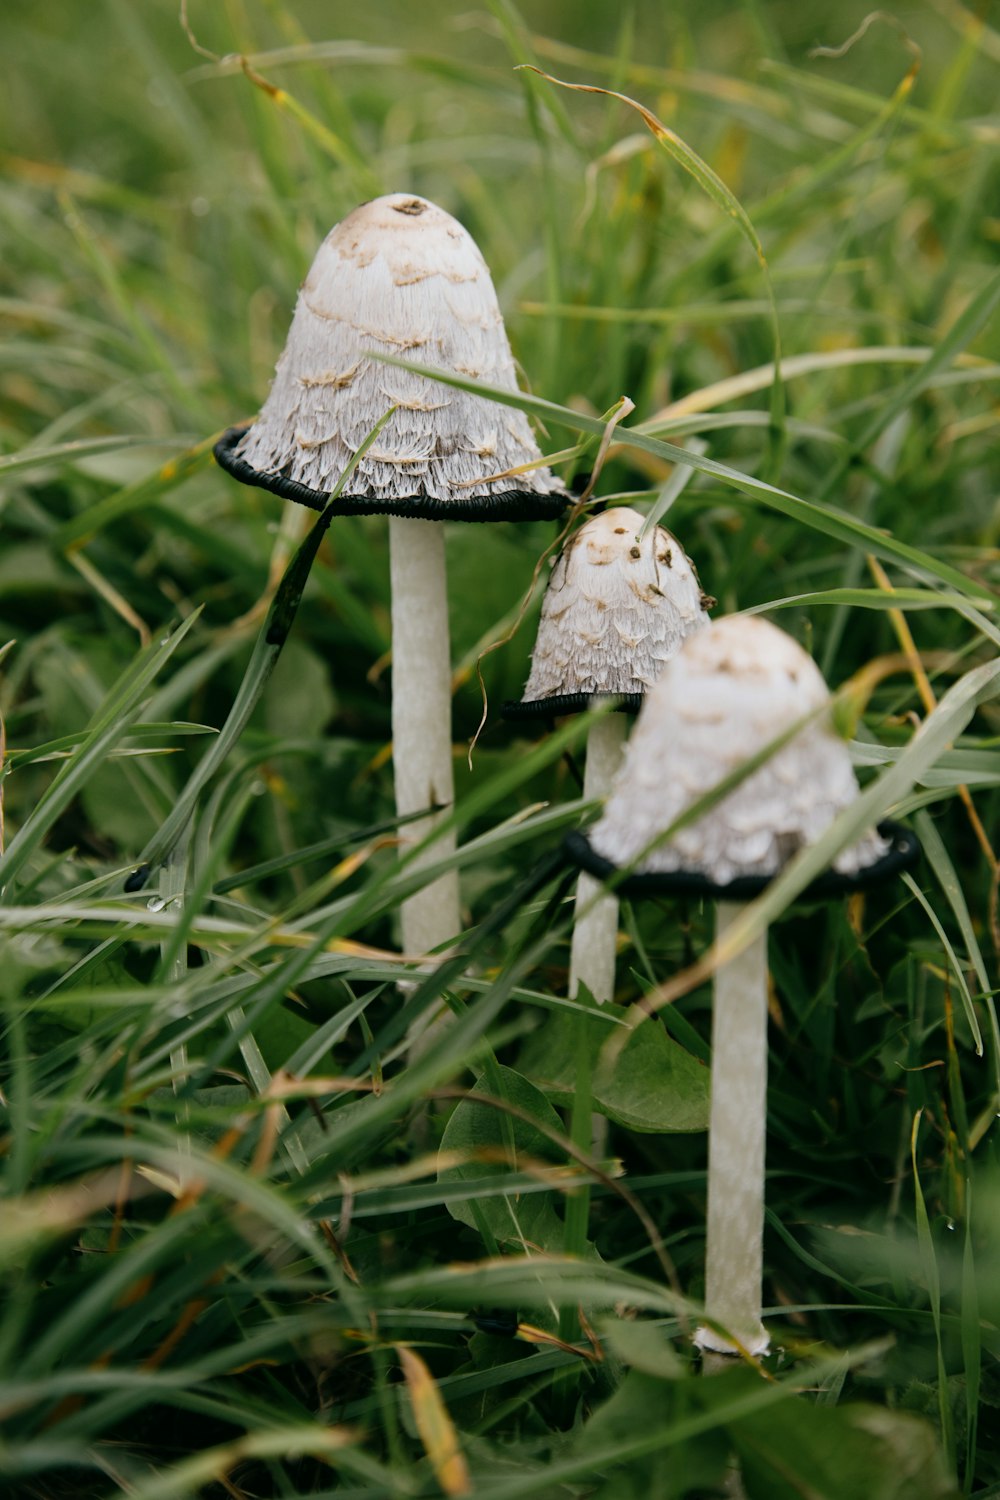 white and black mushroom in green grass